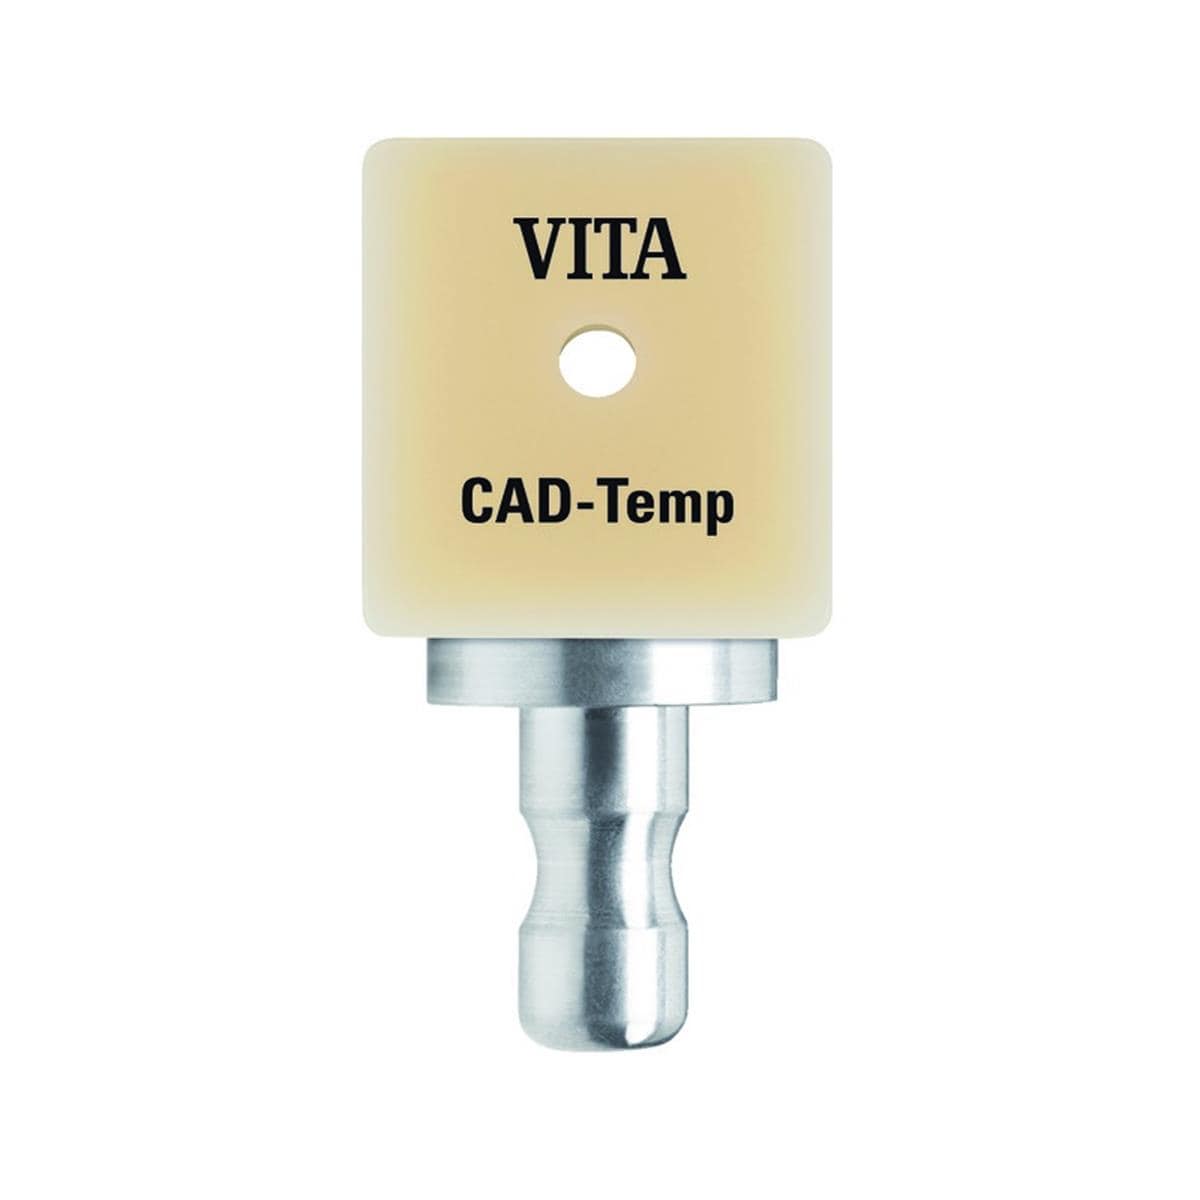 VITA Implant Solutions VITA - CAD-Temp IS - 1M2T 16S - Bote de 5